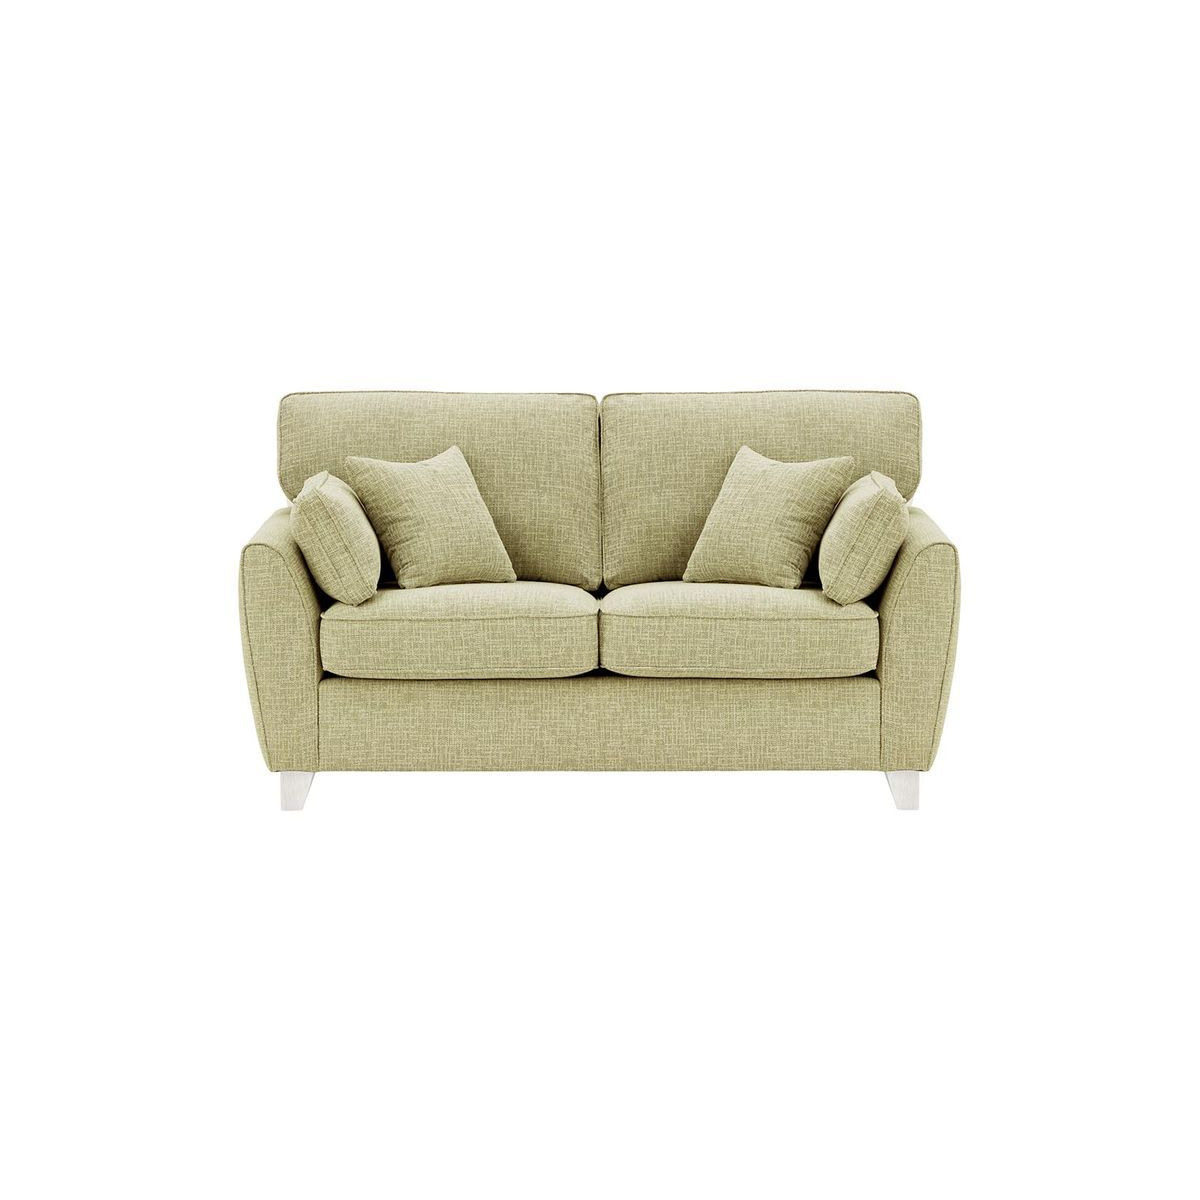 James 2 Seater Sofa, taupe, Leg colour: white - image 1